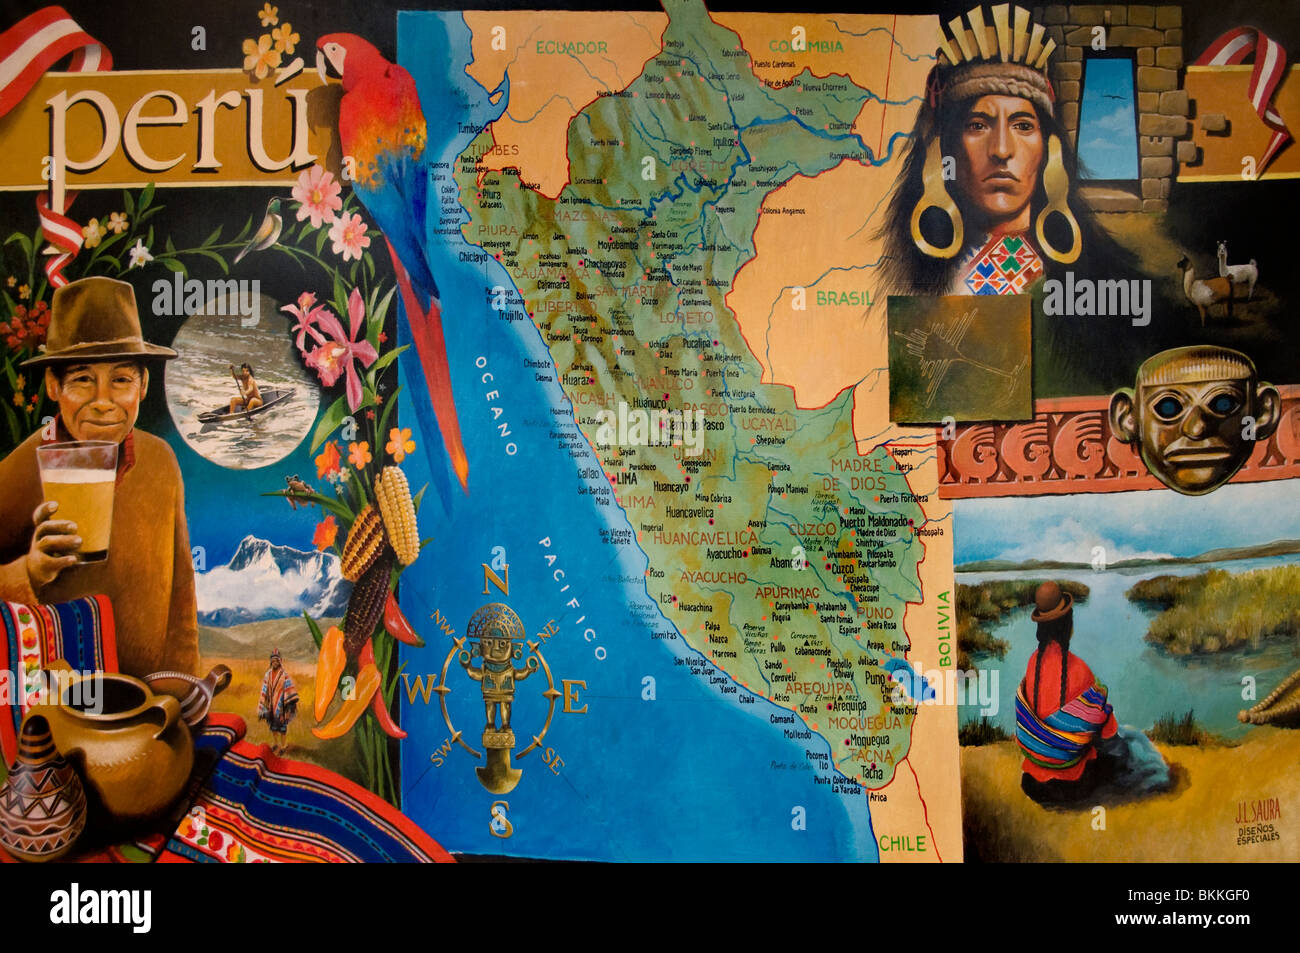 Peru Peruvian South America Indian Painting Map Stock Photo